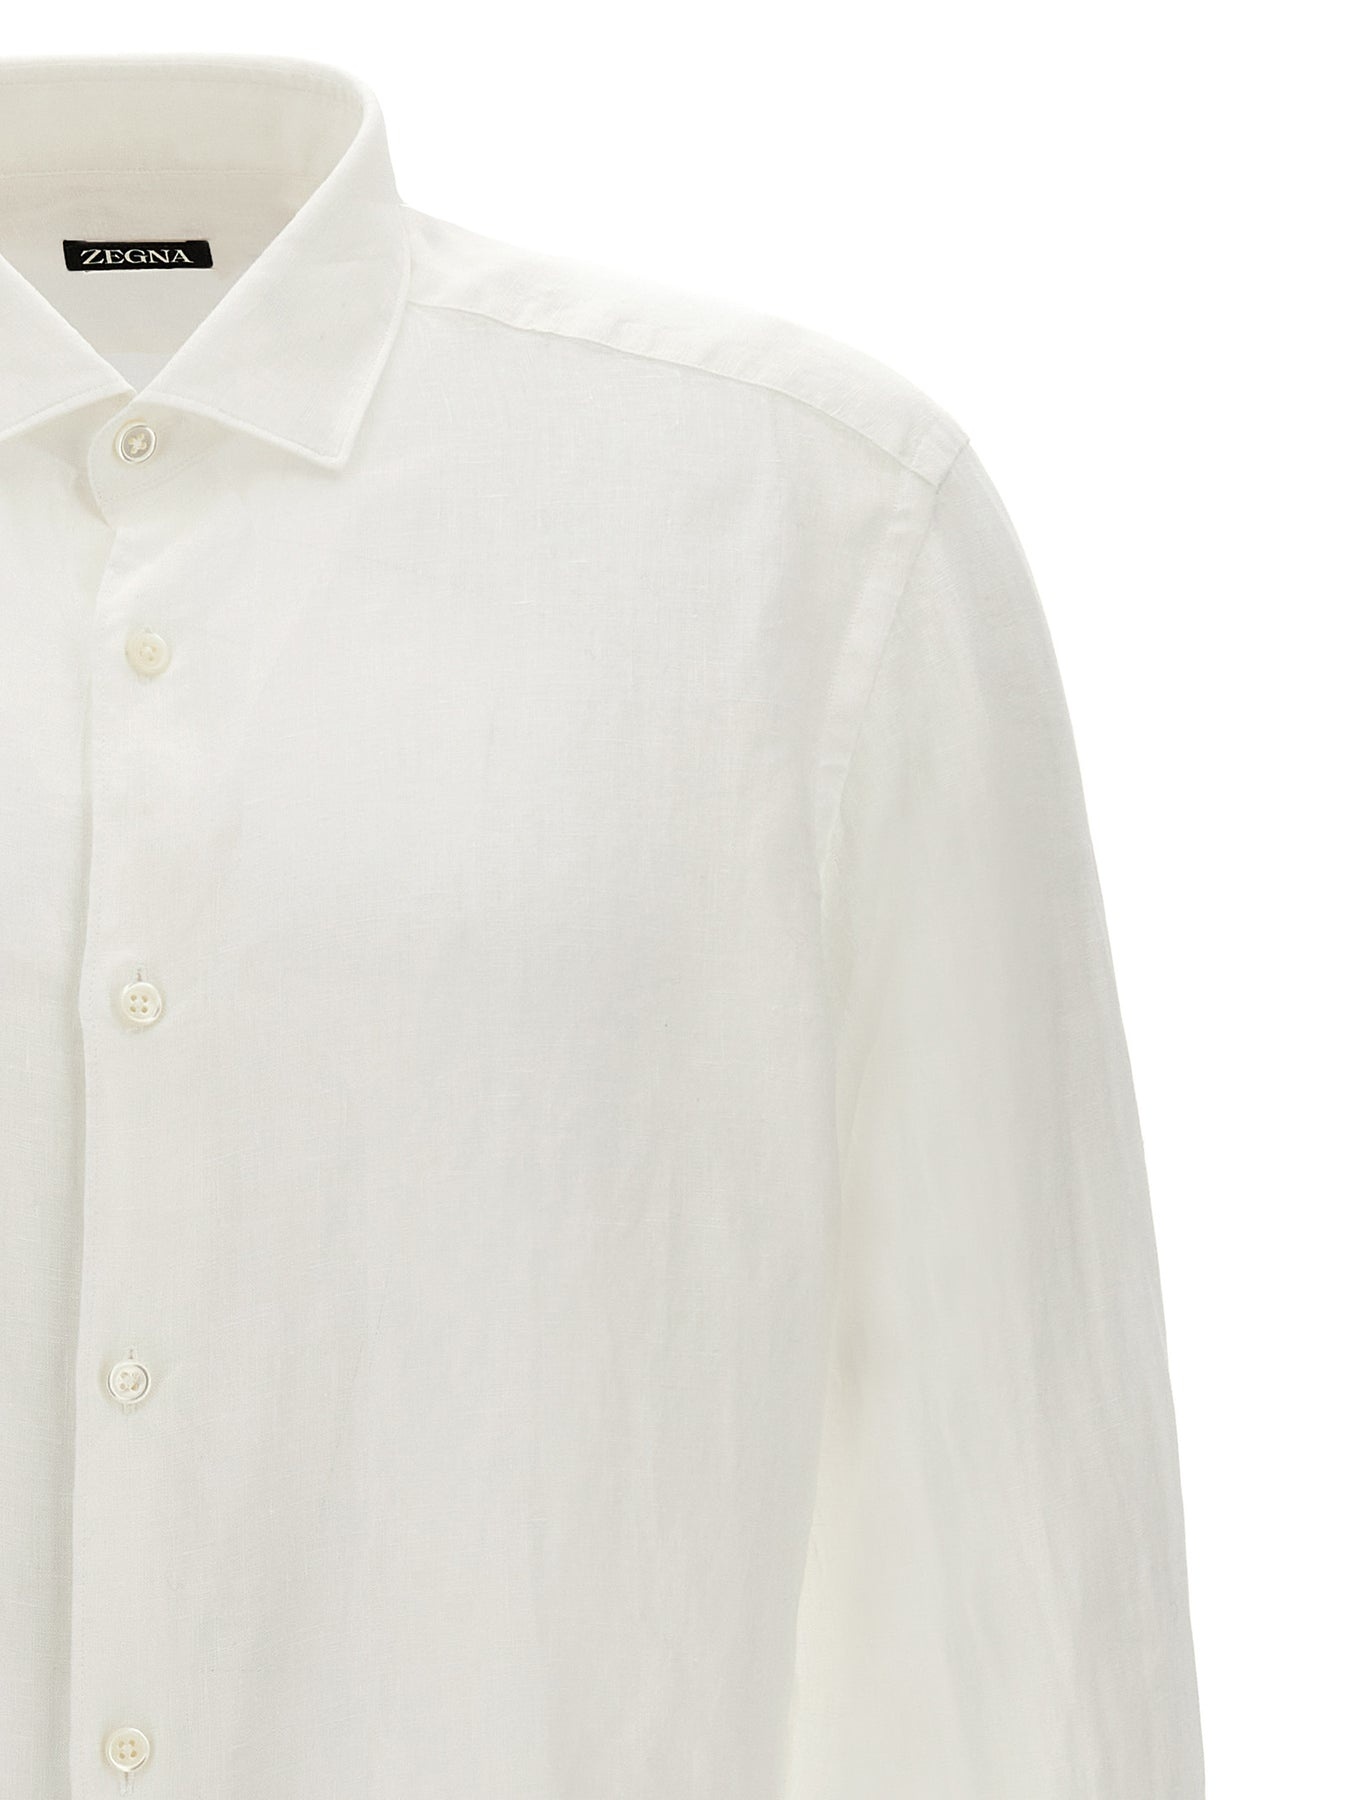 Linen Shirt Shirt, Blouse White - 3